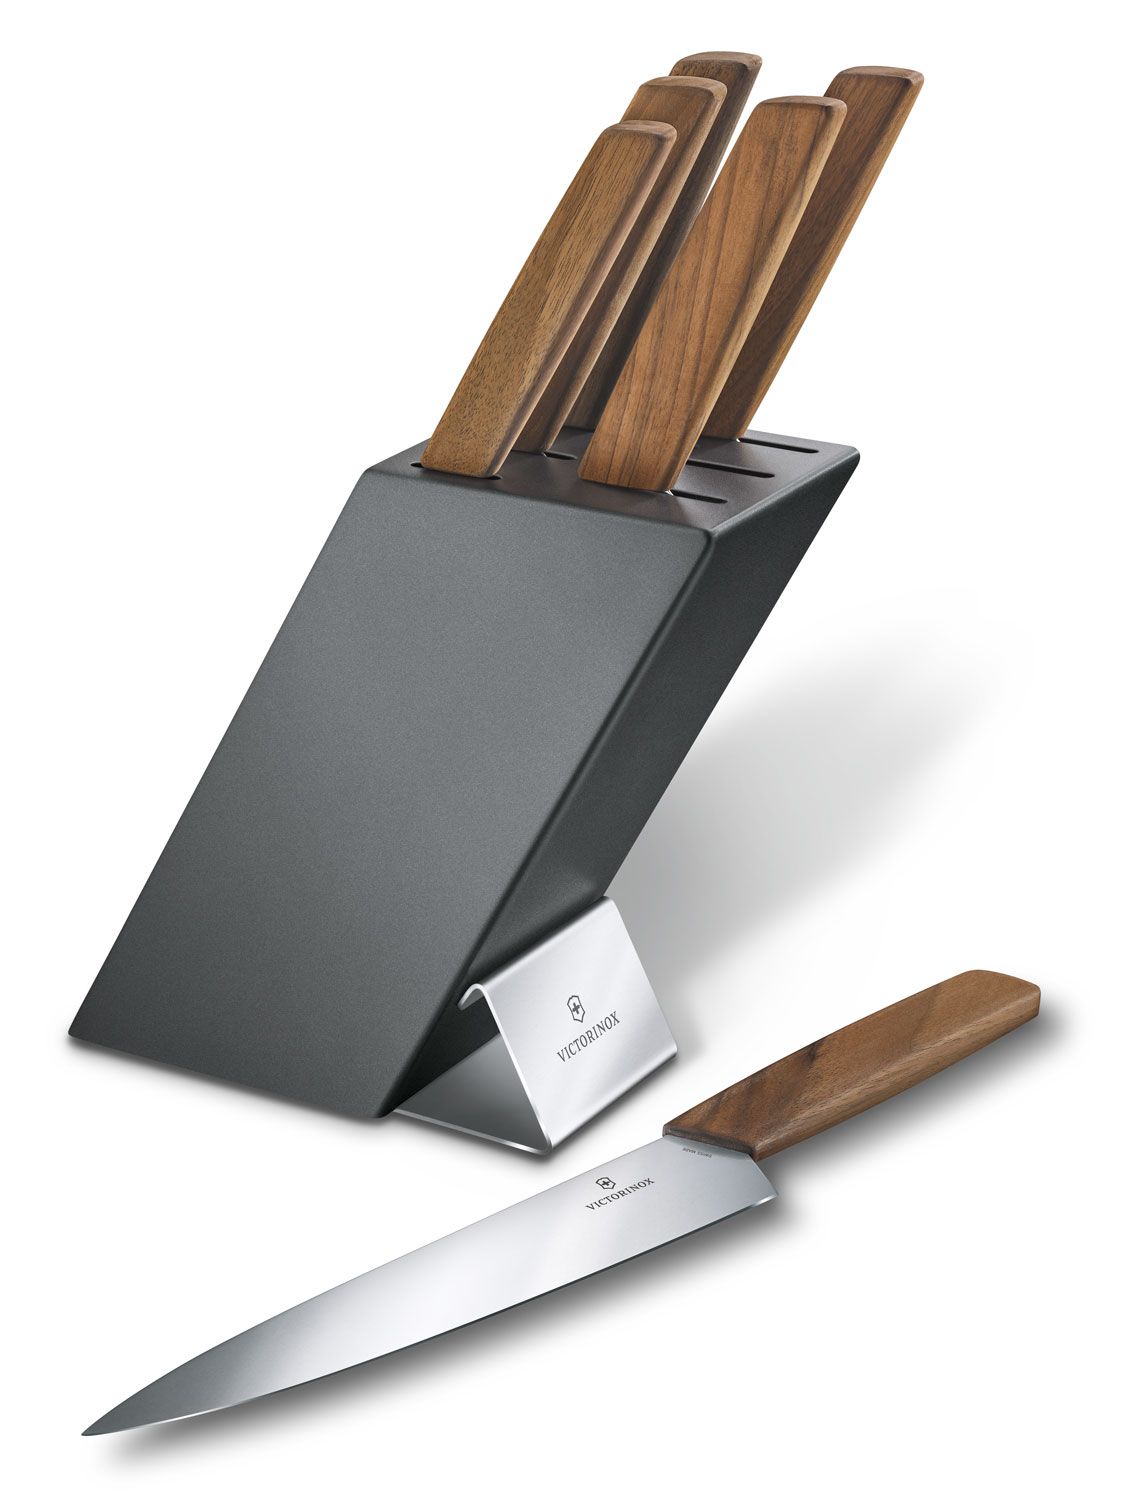 Victorinox Swiss Modern 7-Piece Wooden Knife Block Set, Anthracite -  KnifeCenter - 6.7186.6